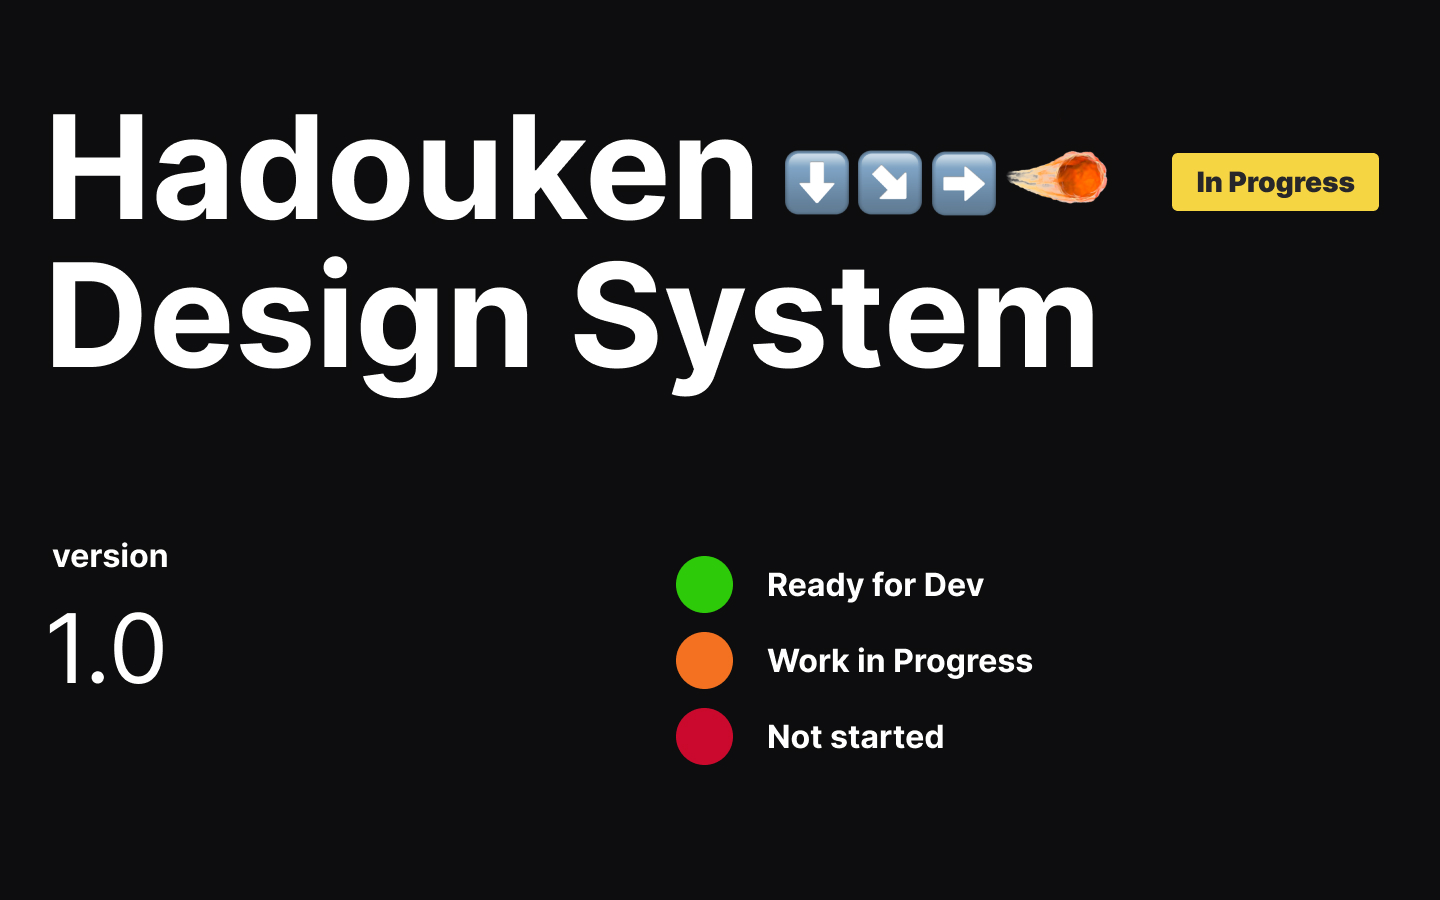 Hadouken Design System Cover version 1.0. Image shows traffic light system of green - ready for dev, orange iwork in progress, red not started